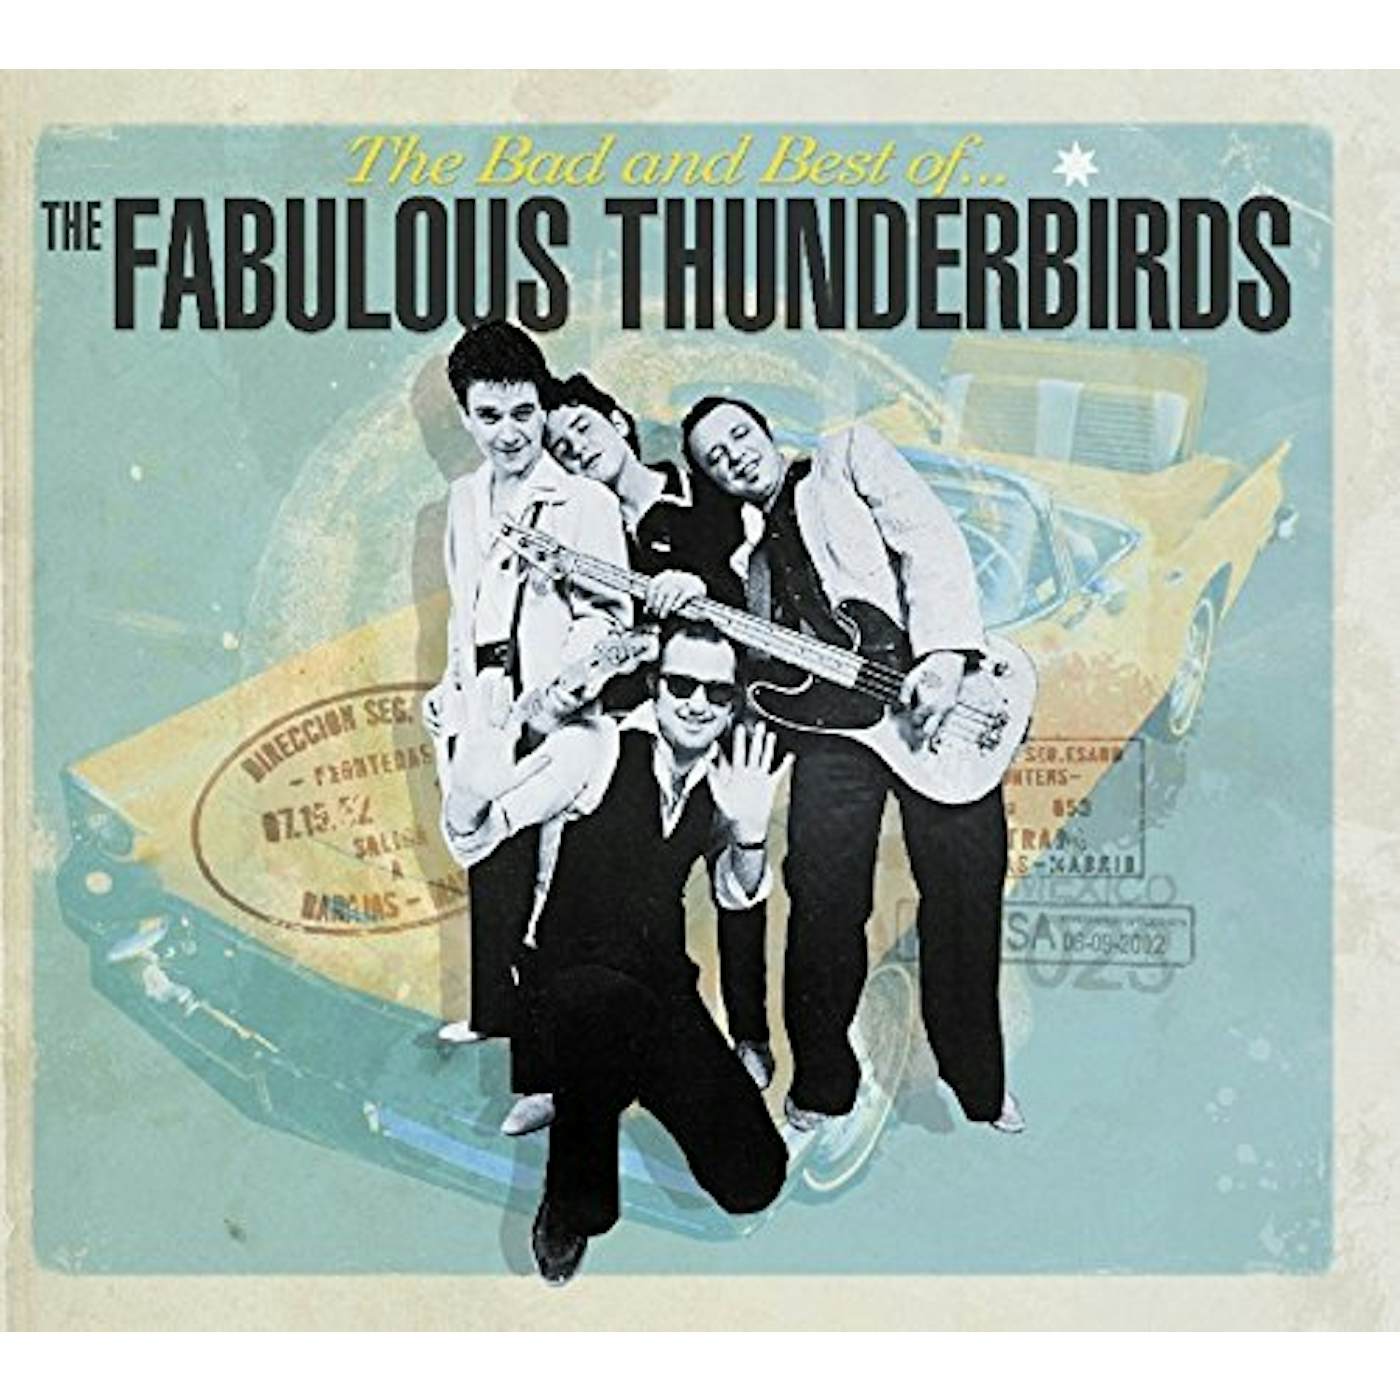 BAD & BEST OF THE FABULOUS THUNDERBIRDS Vinyl Record